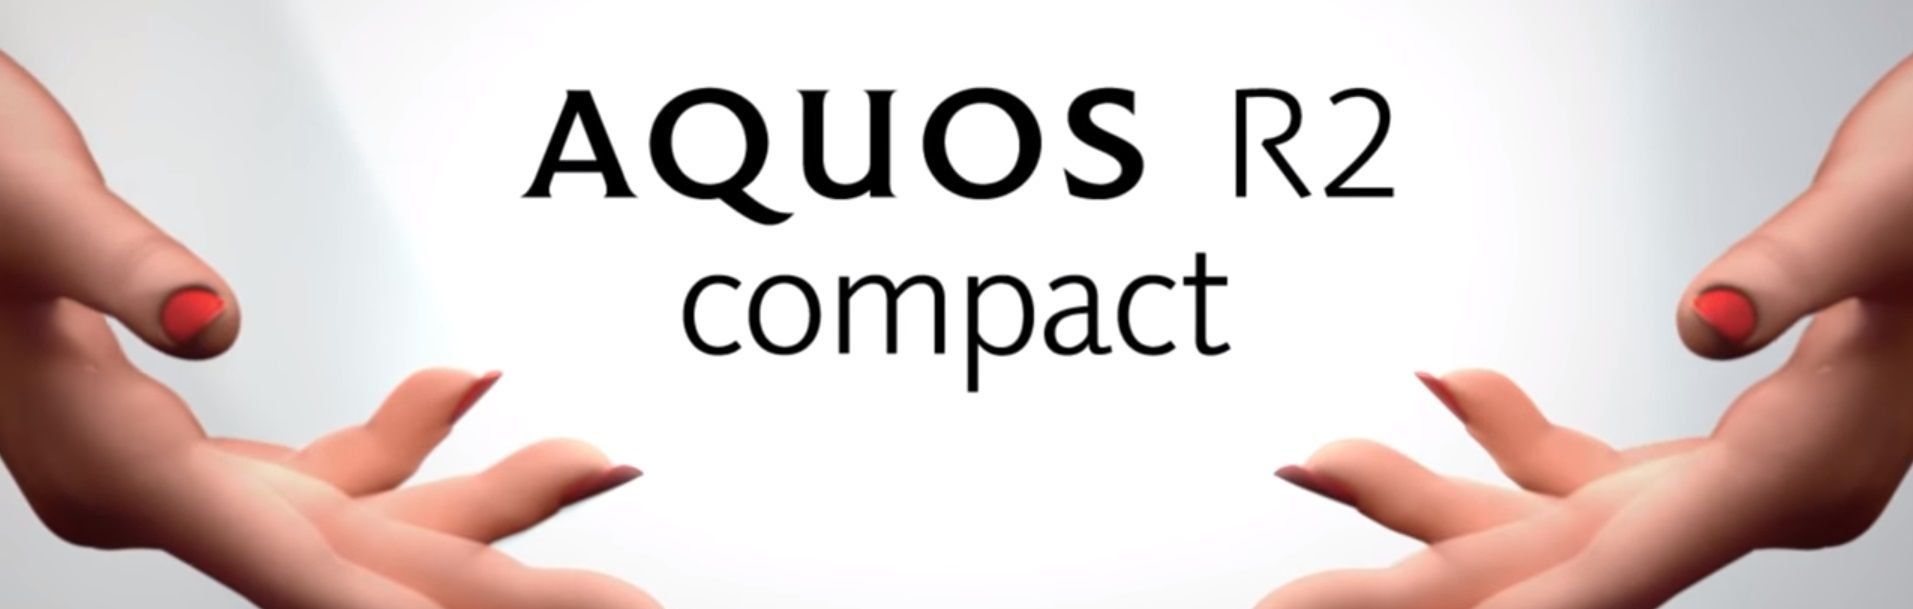 Sharp Aquos R2 Compact smartphone - advantages and disadvantages